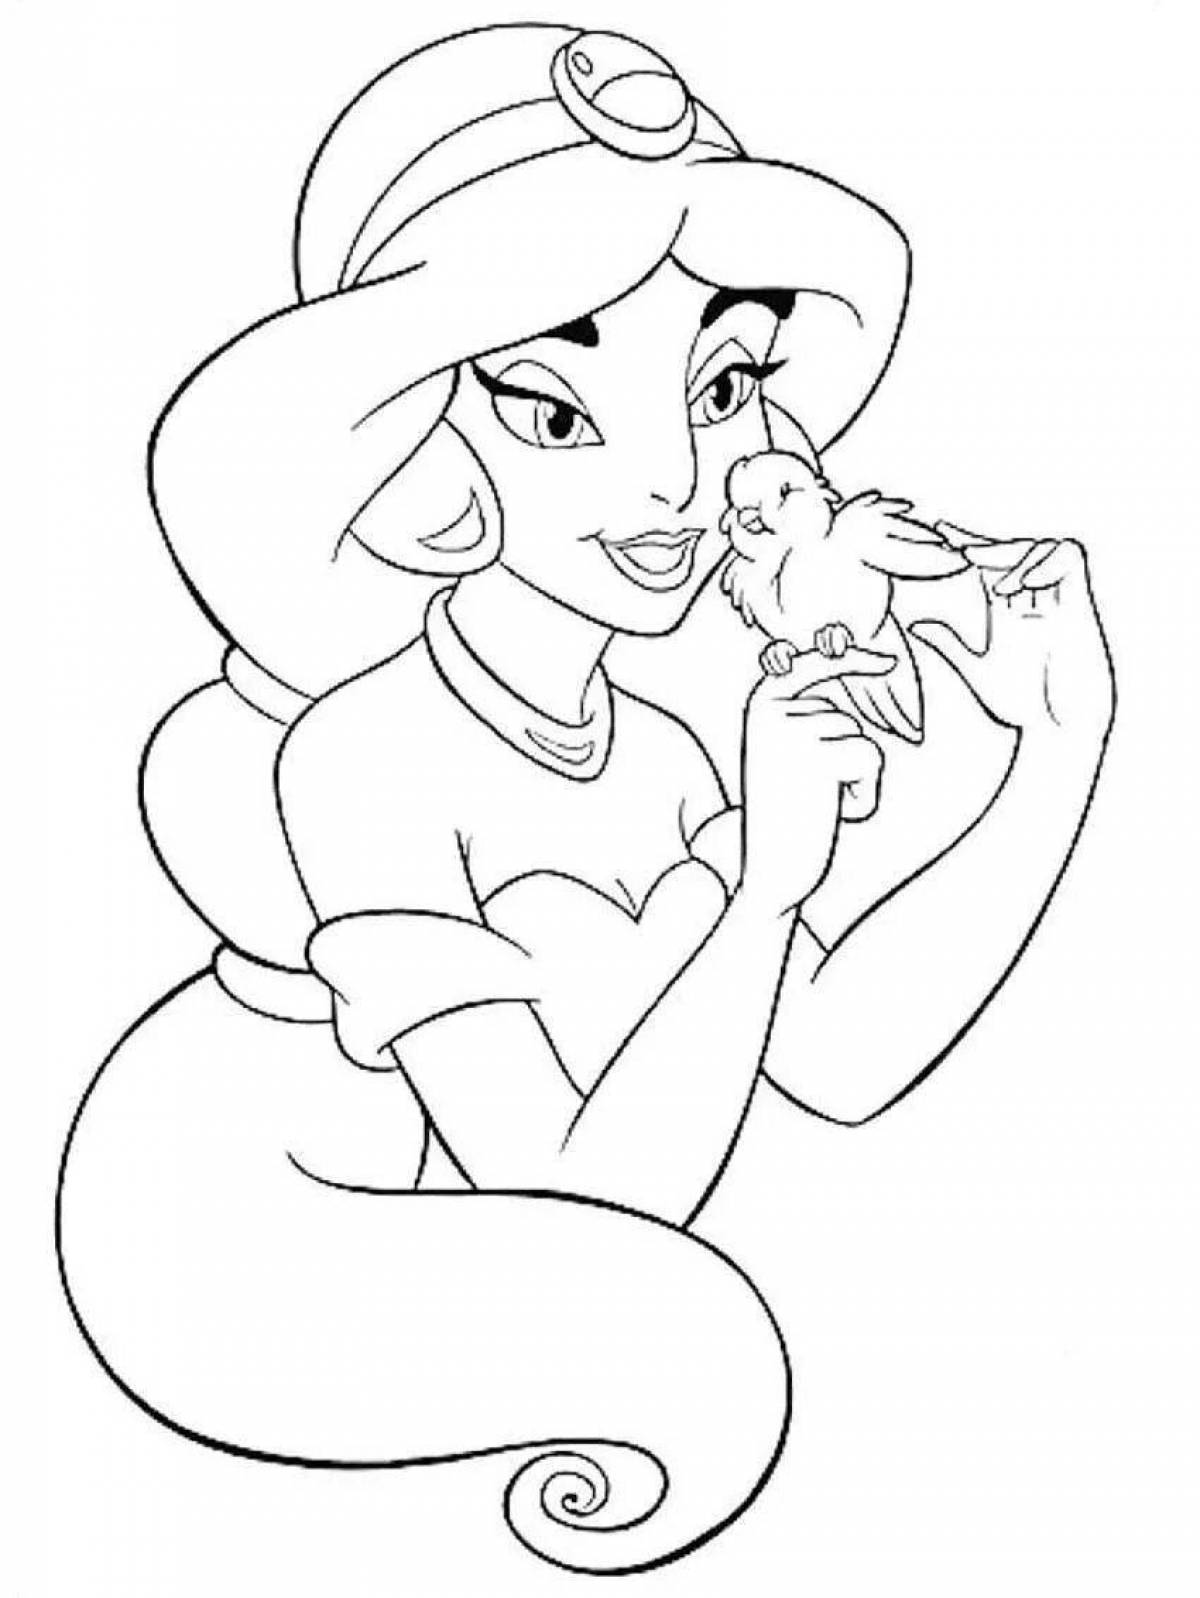 Joyful coloring cartoon princesses